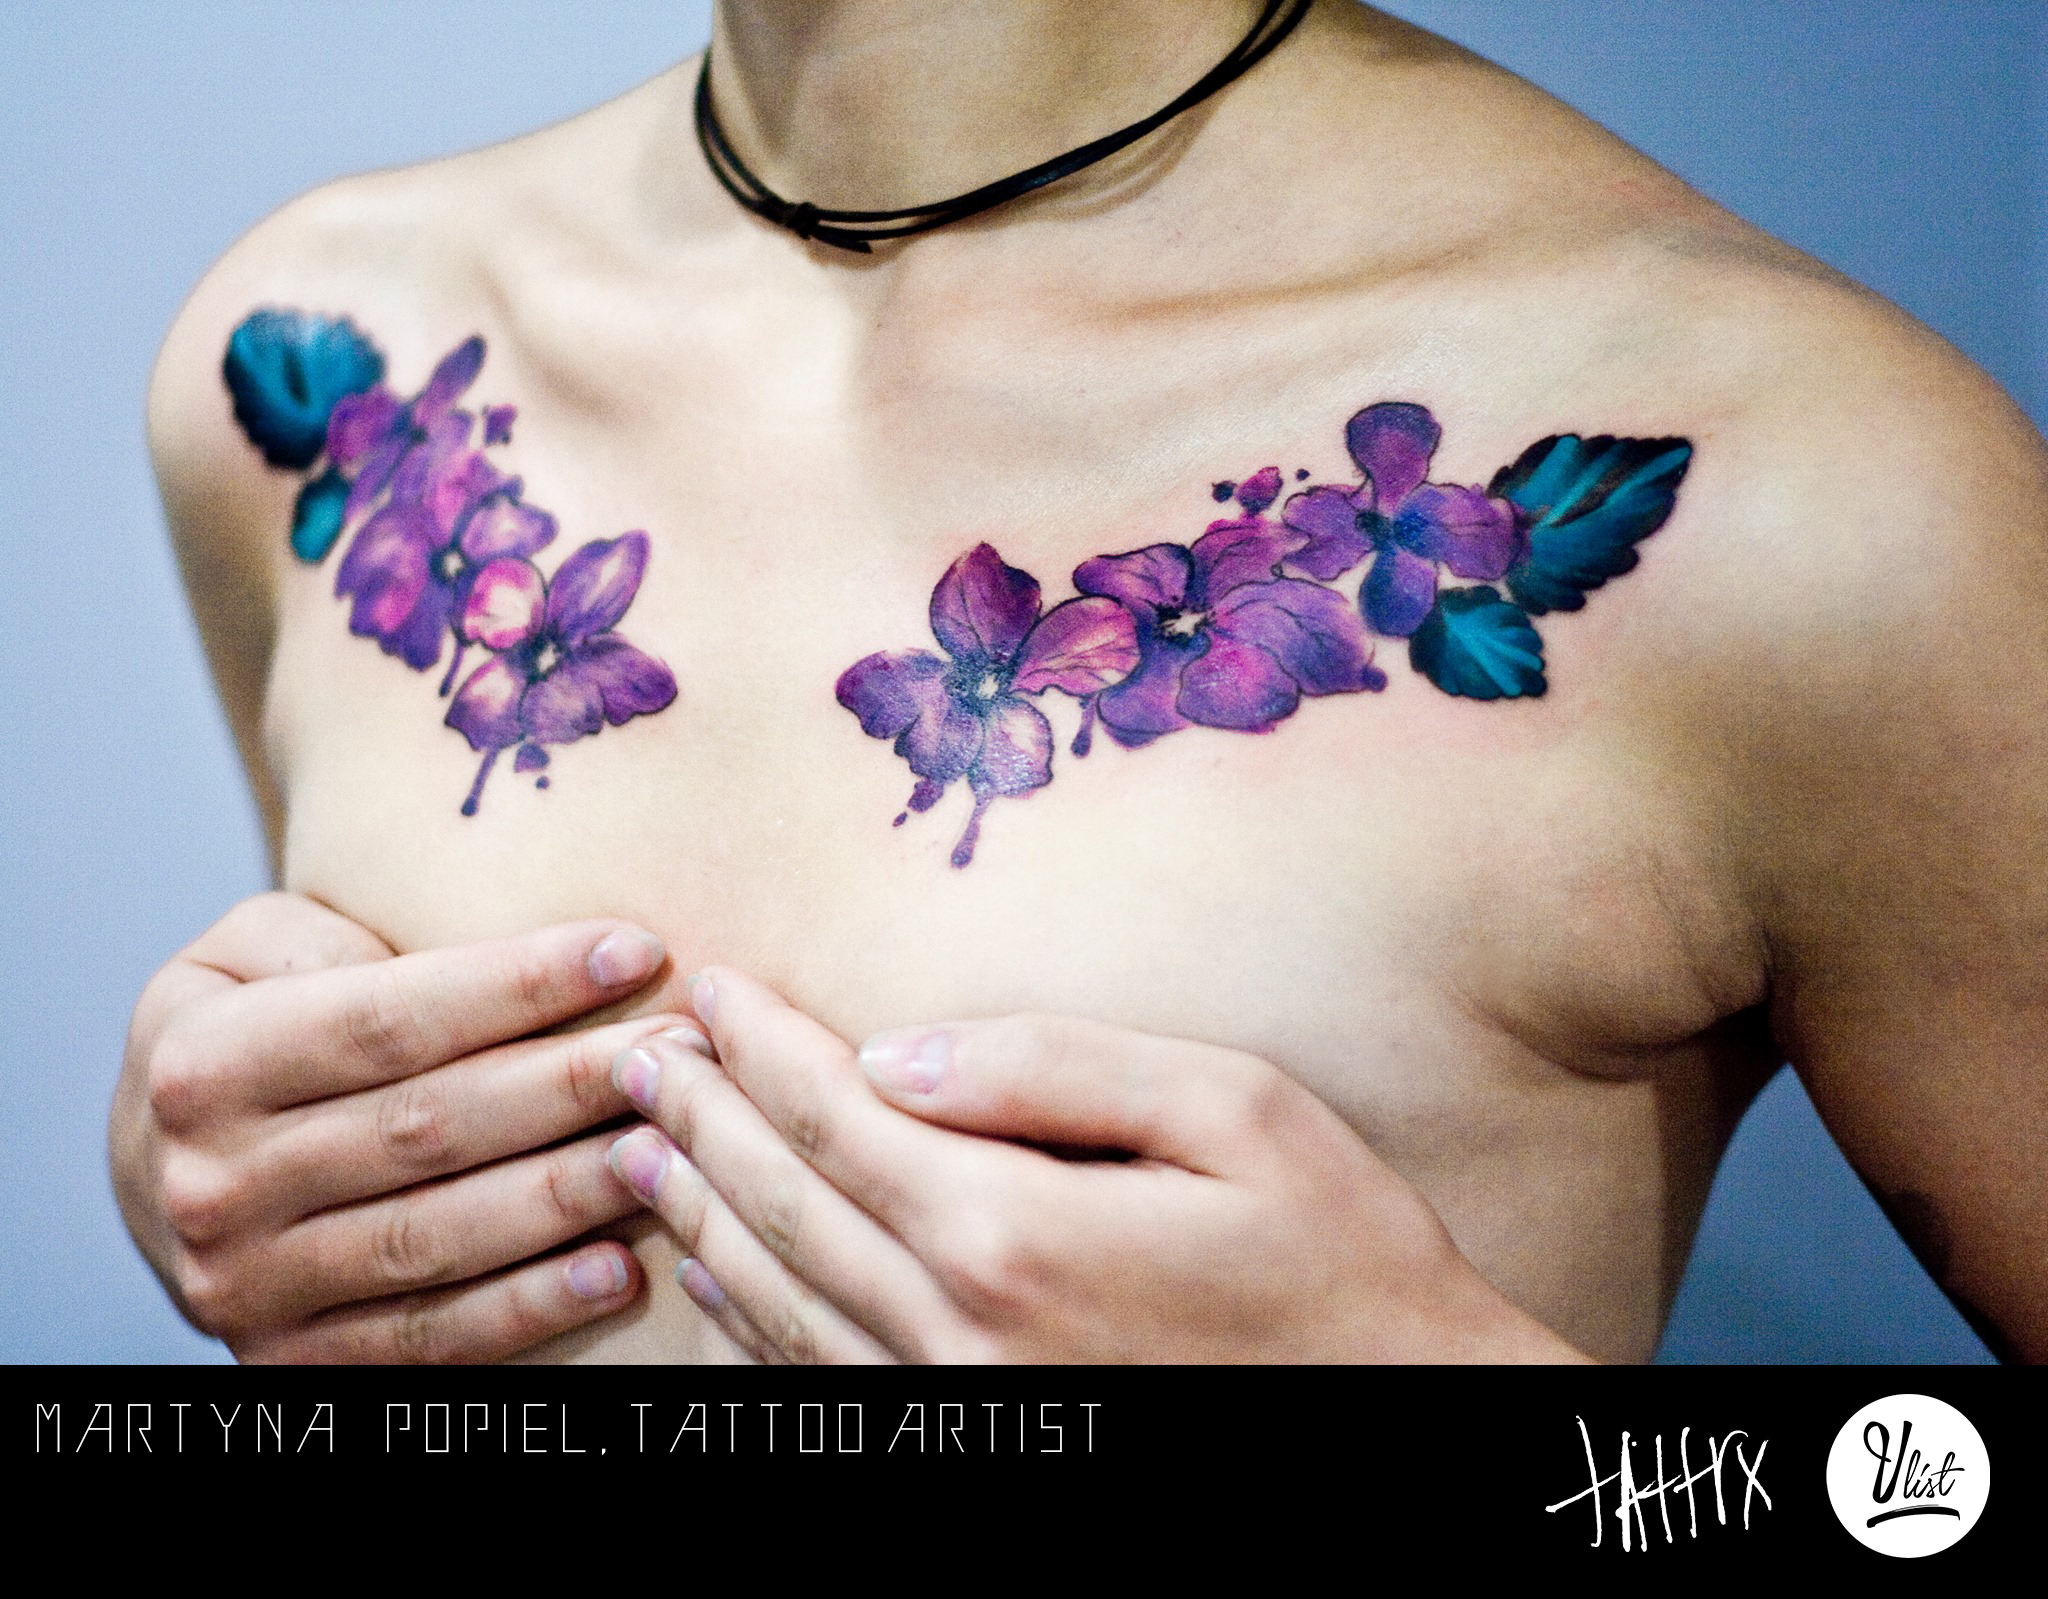 Martyna Popiel, tattoo artist - the vandallist